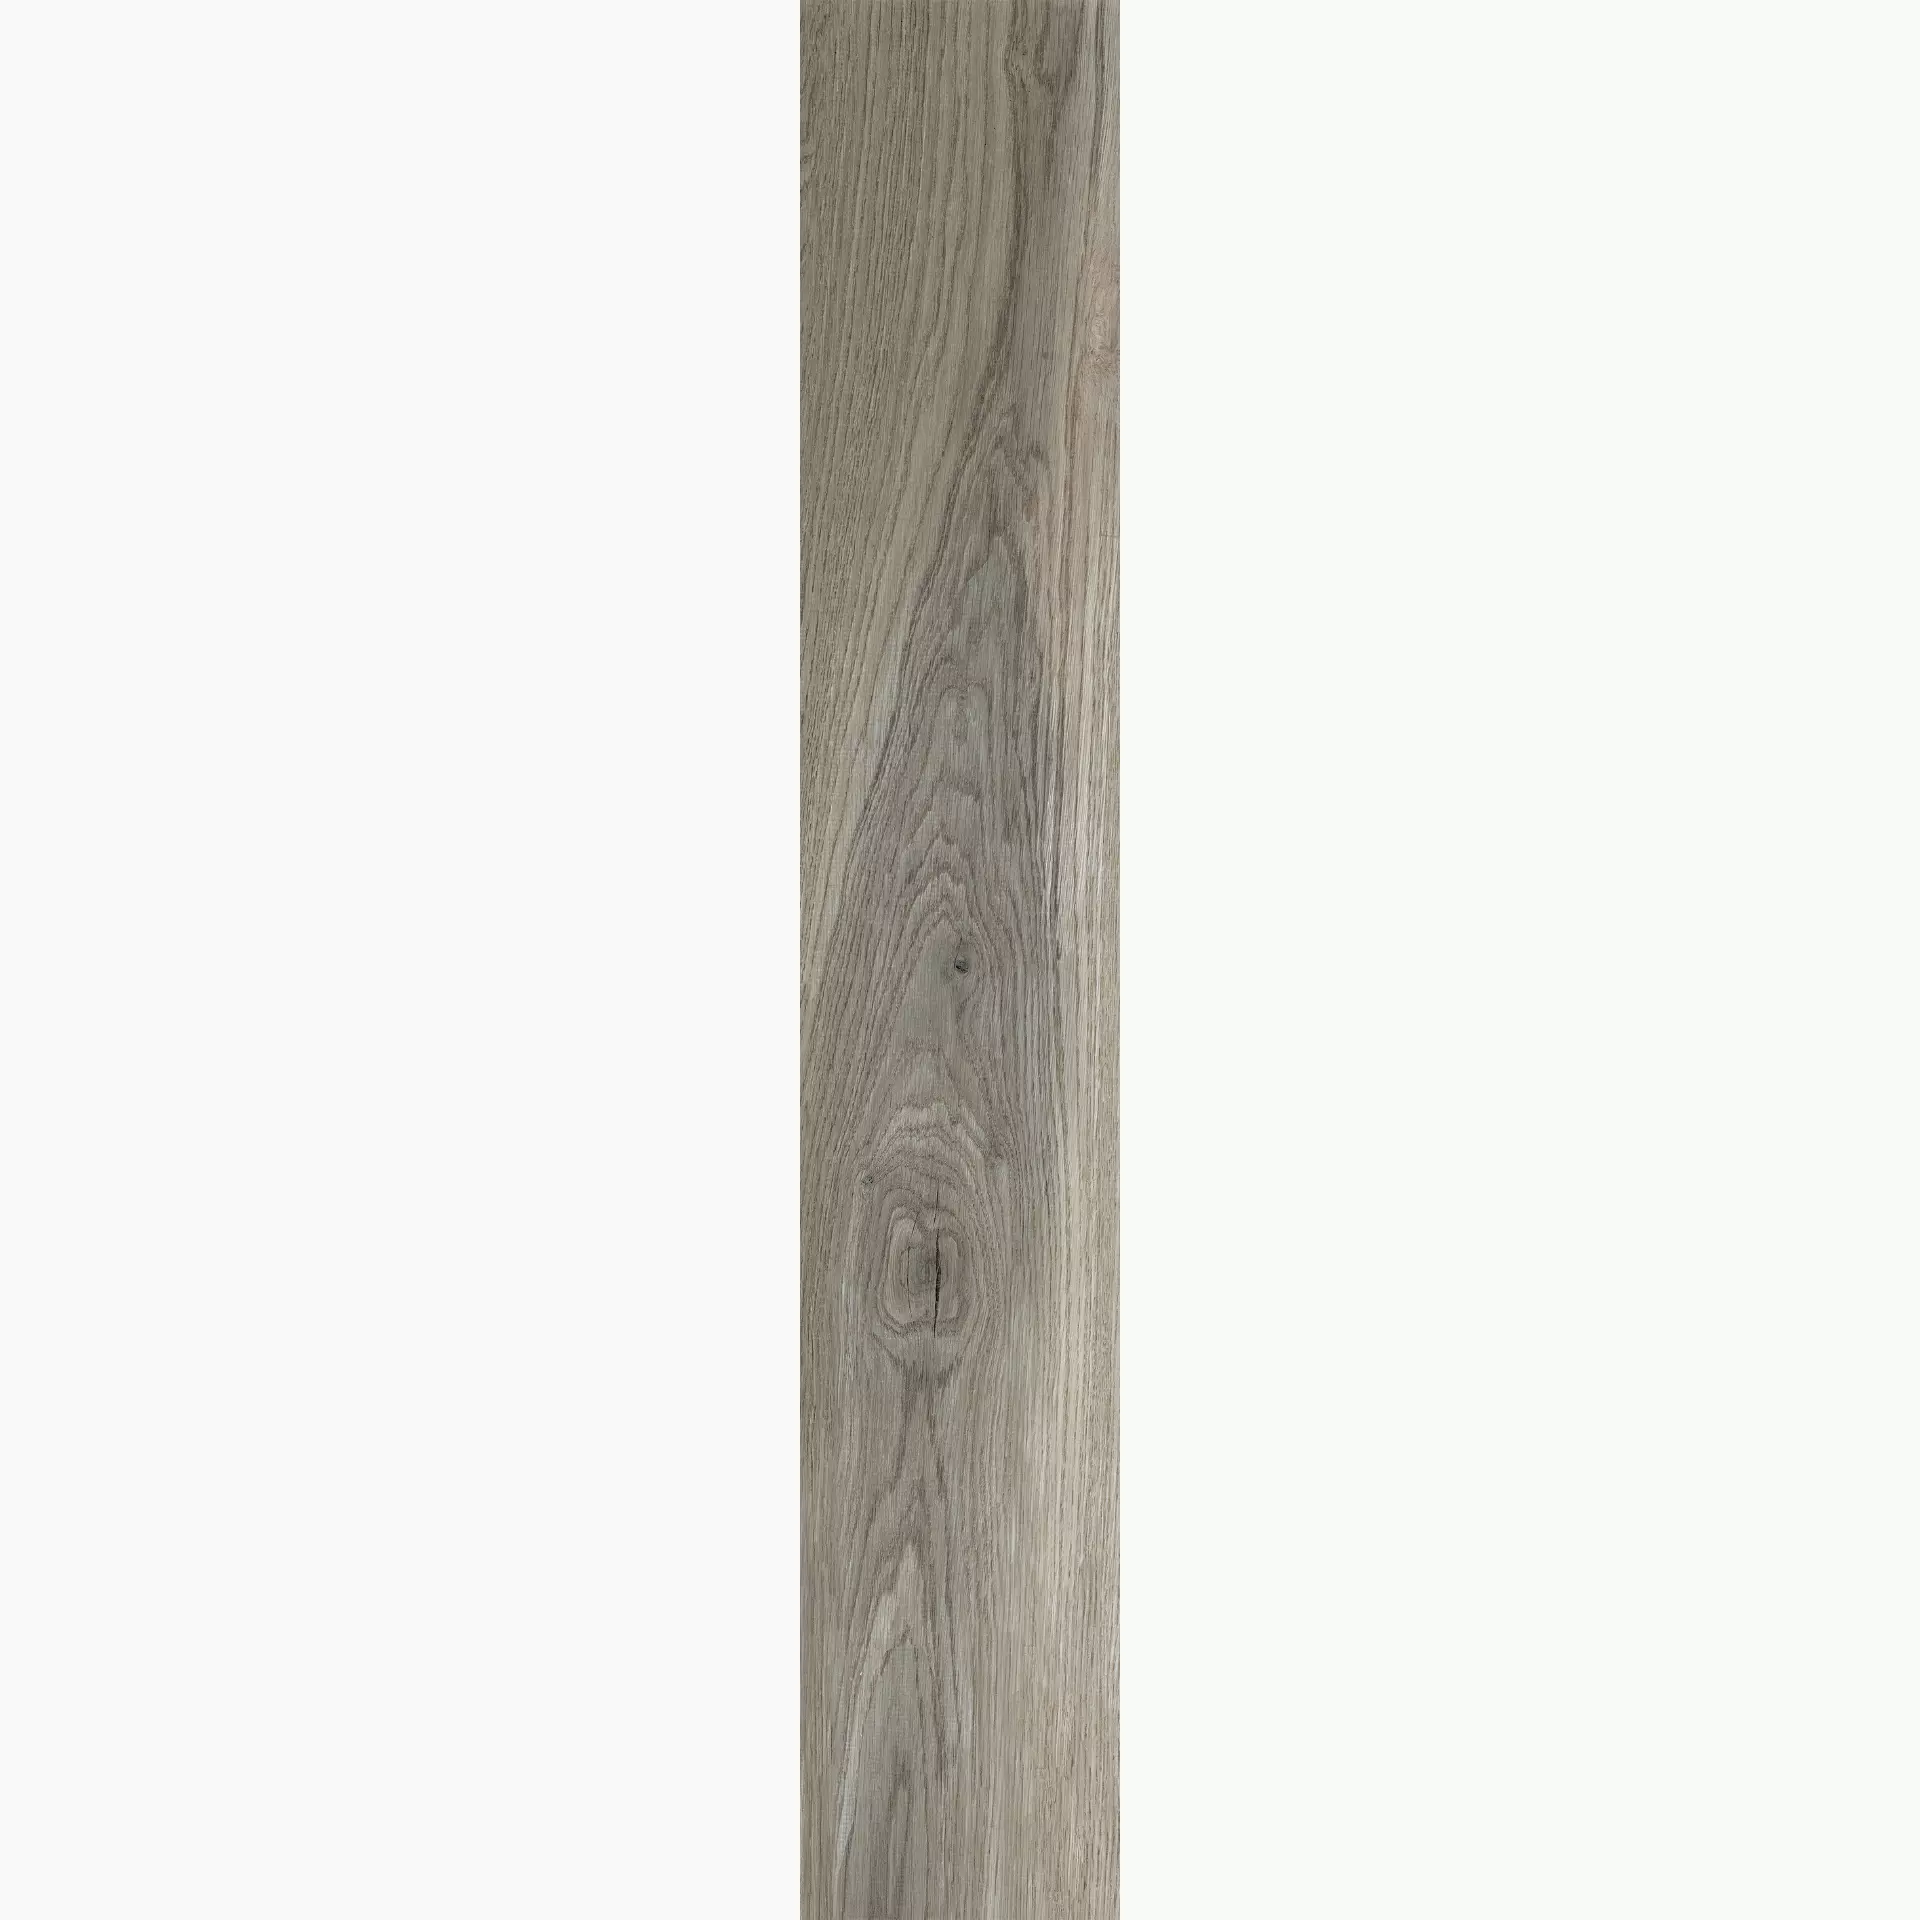 Florim Hi-Wood Of Cerim Grey Oak Naturale – Matt 759960 20x120cm rectified 9mm